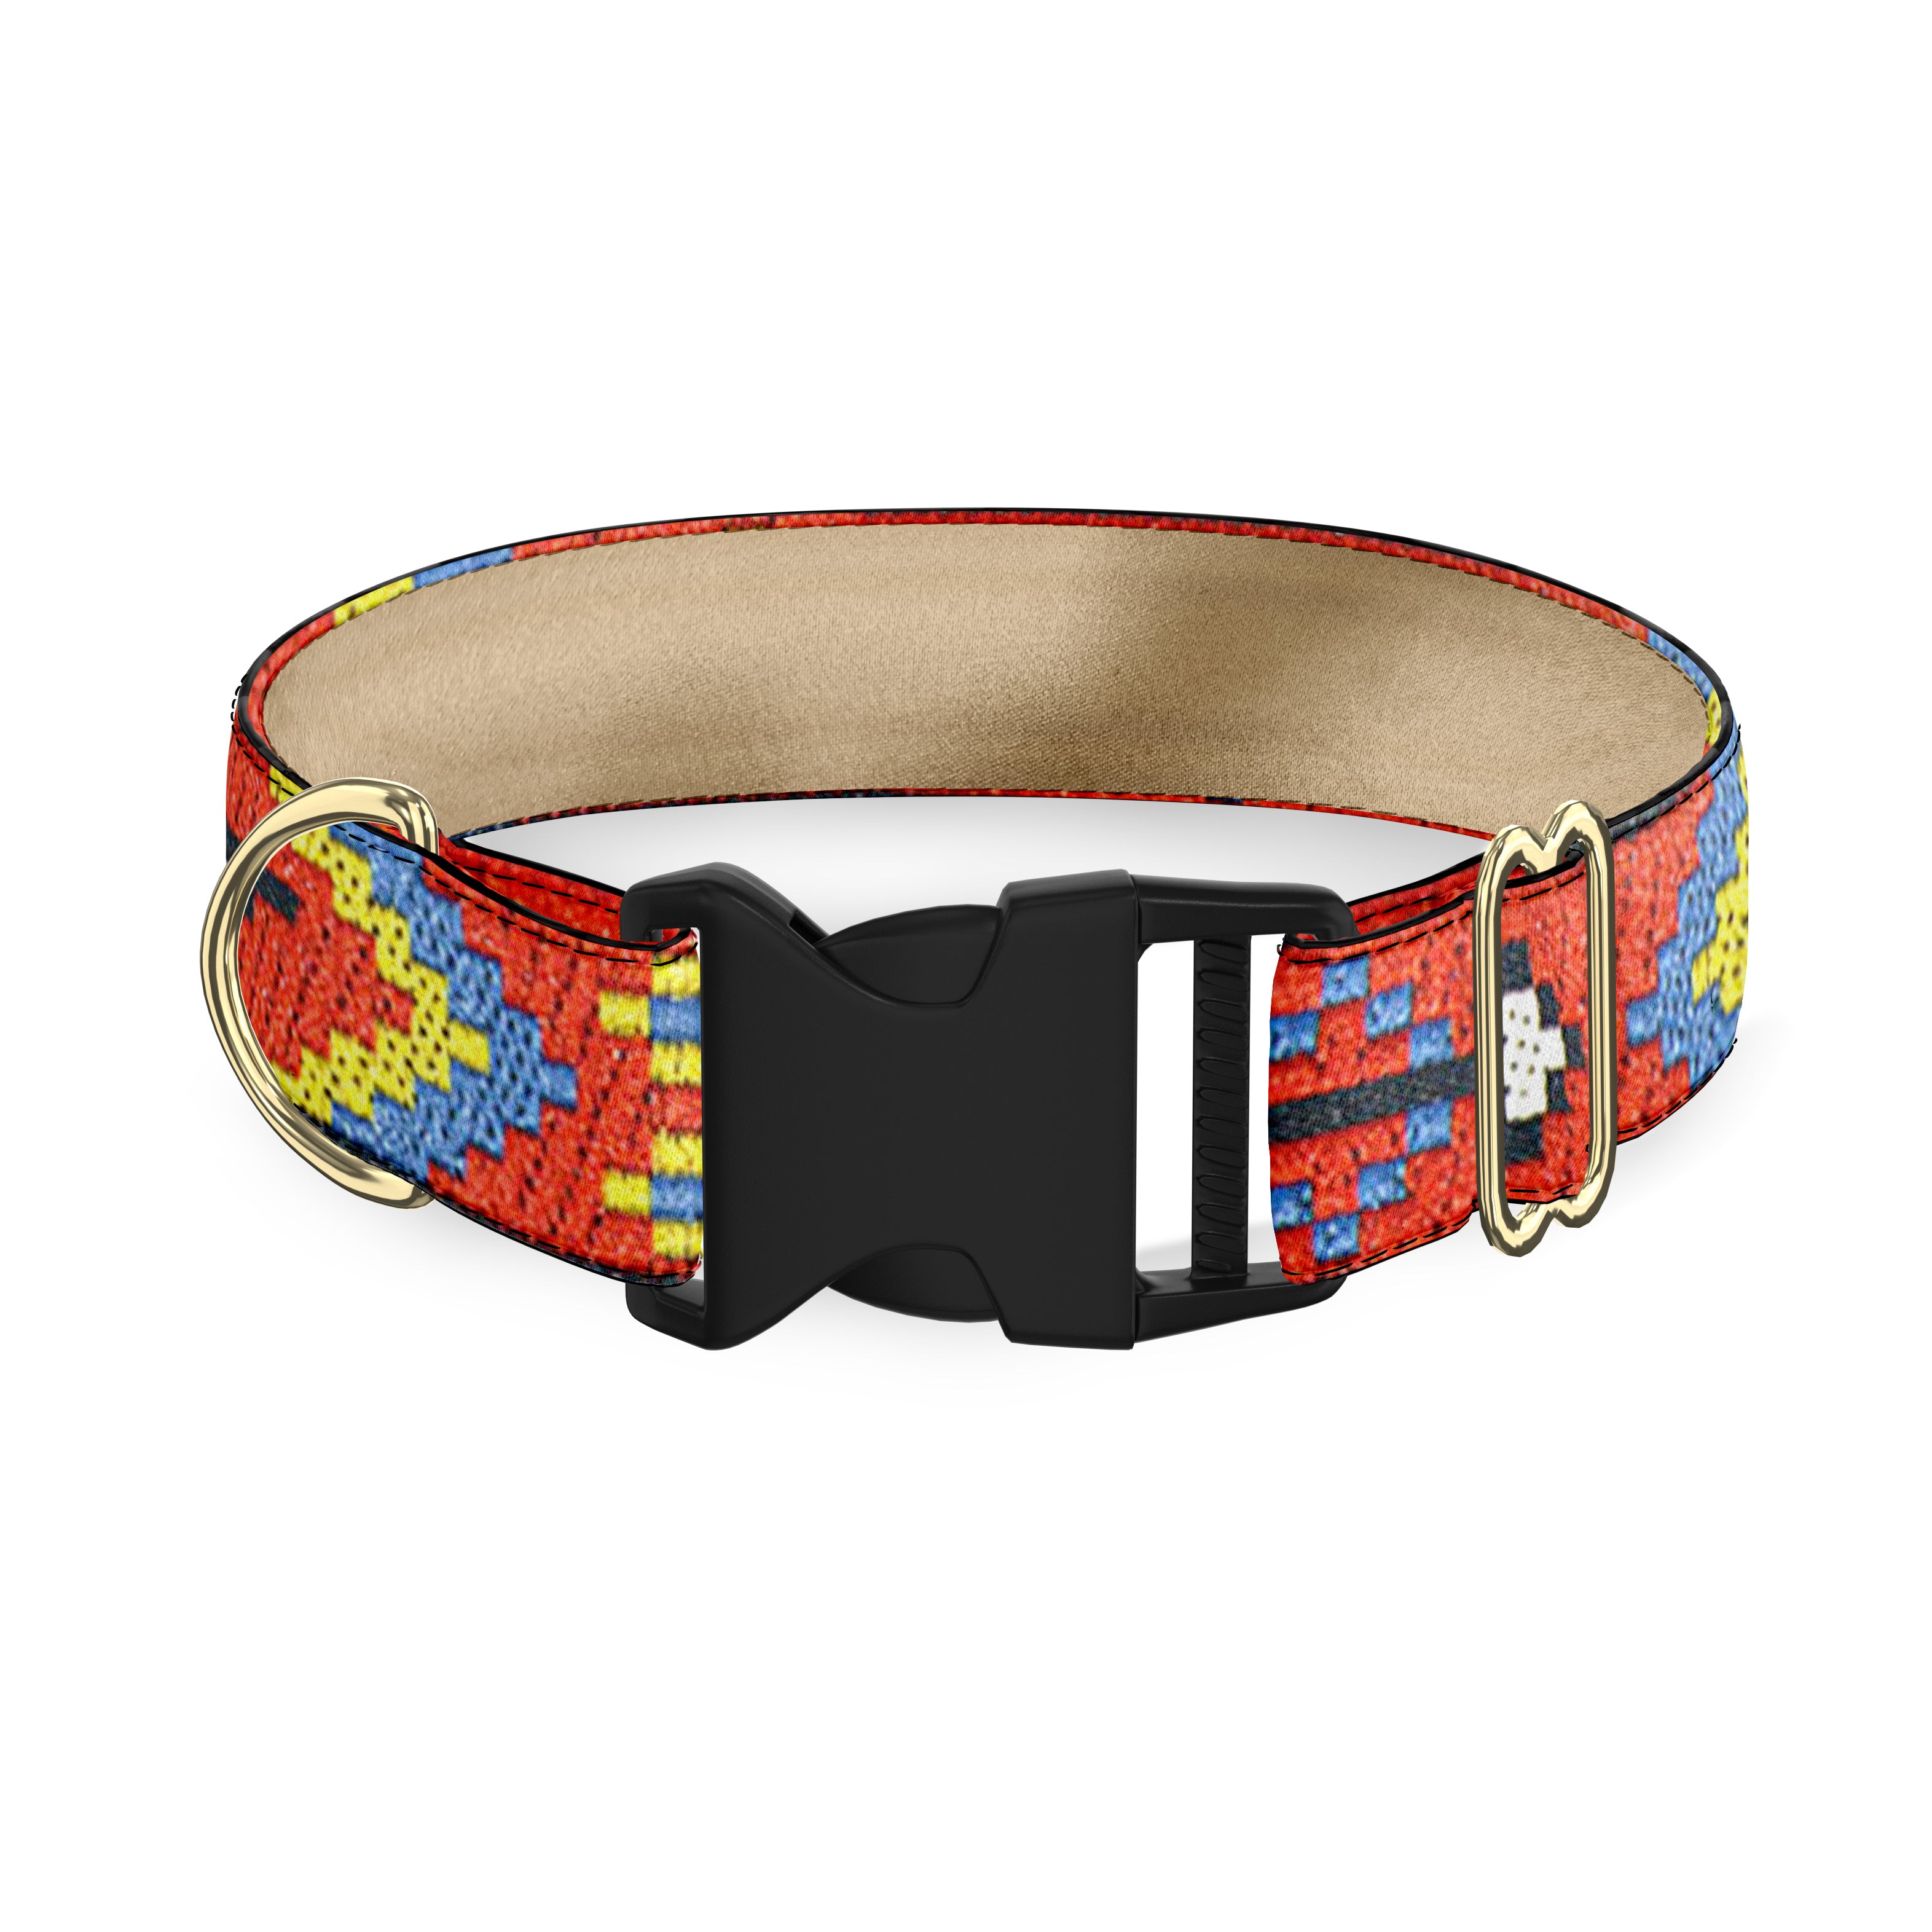 Louis Vuitton XXL dog collar  Fancy dog collars, Louis vuitton dog collar,  Dog accessories